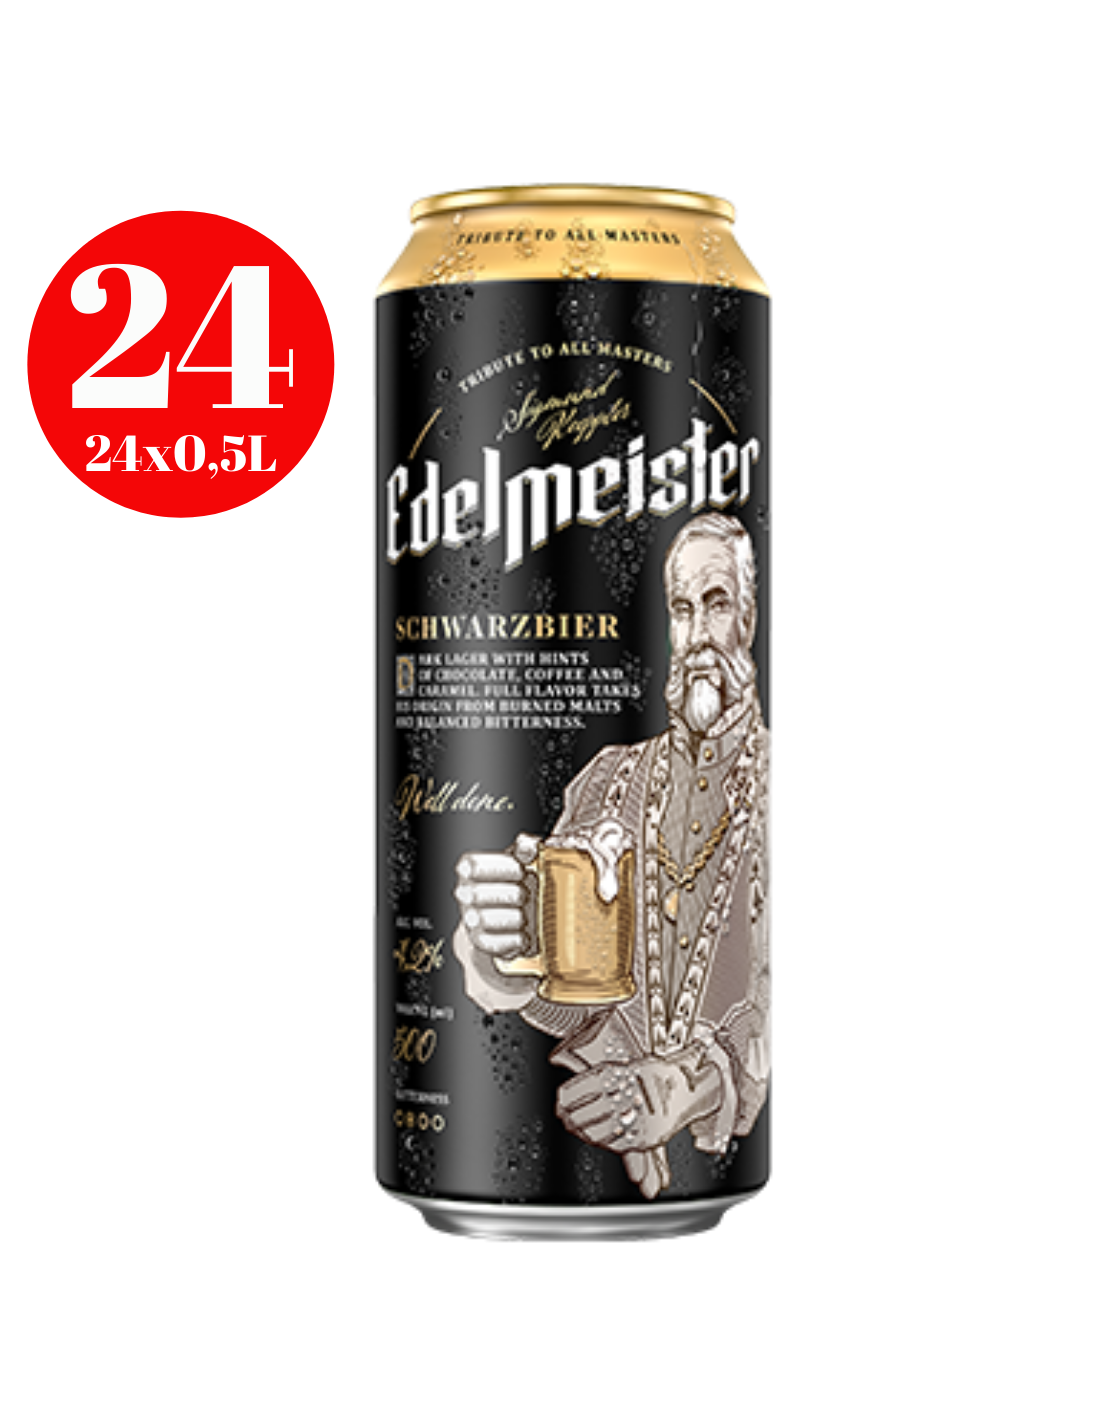 Bax 24 bucati bere neagra Edelmeister Schwarz, 4.5% alc., 0.5L, Polonia alcooldiscount.ro